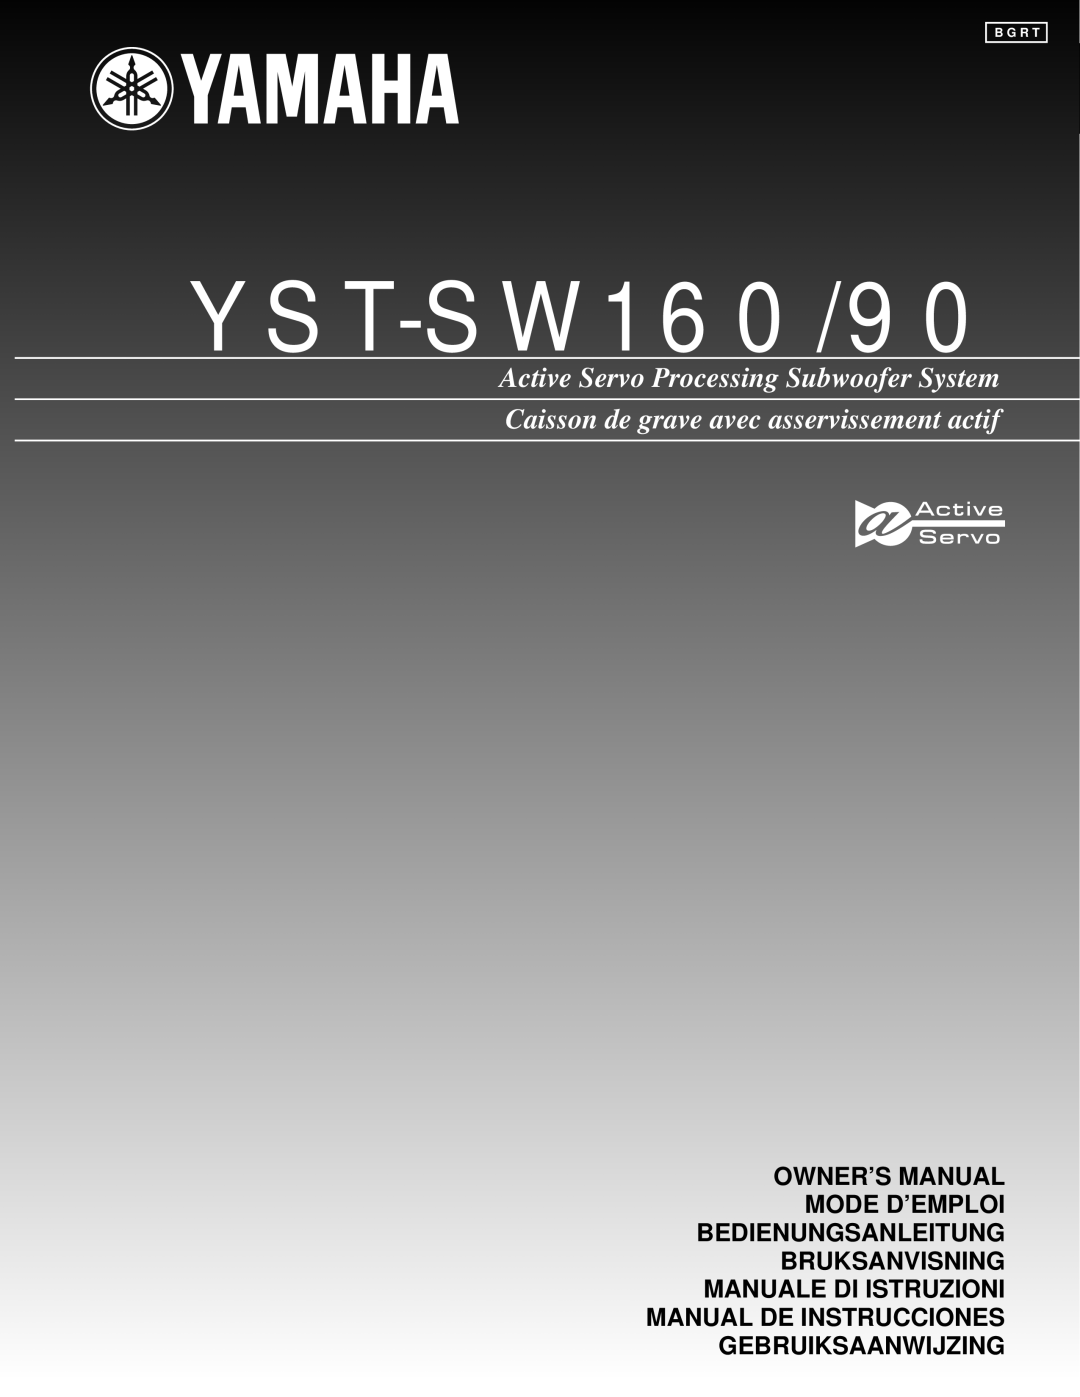 Yamaha YST-SW160/90 owner manual English, Active Servo Processing Subwoofer System, B G R T 